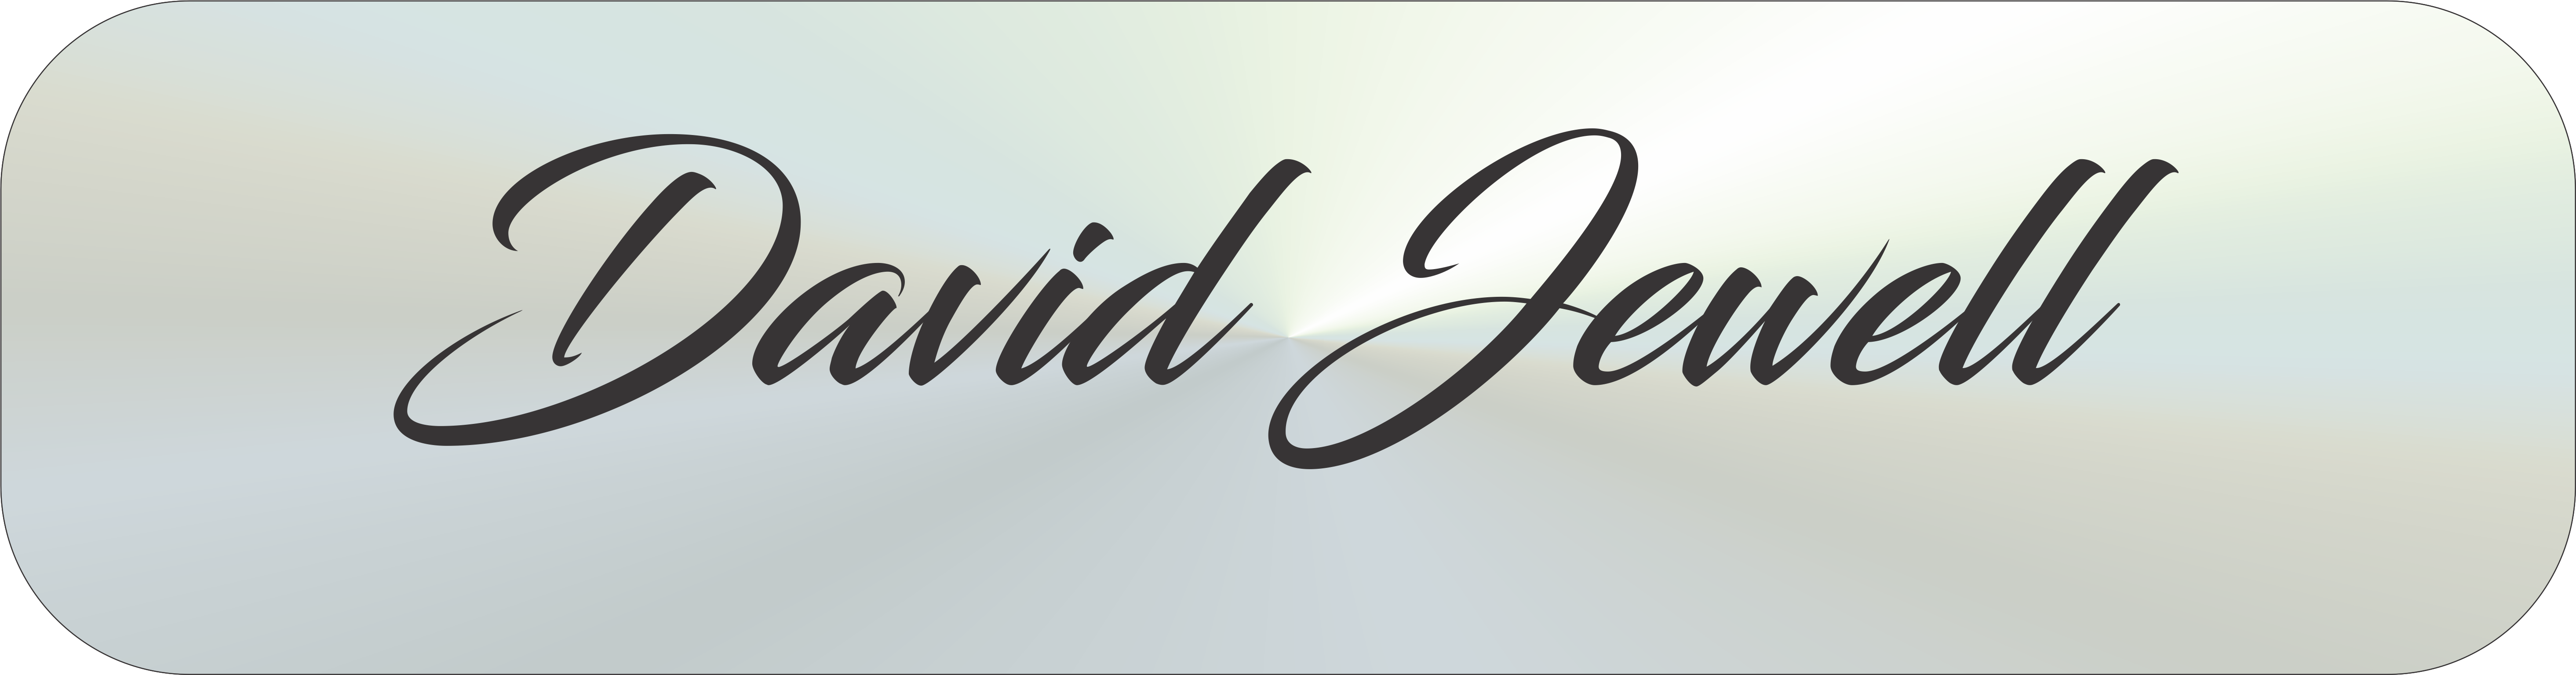 White Rock Events David Jewell Logo